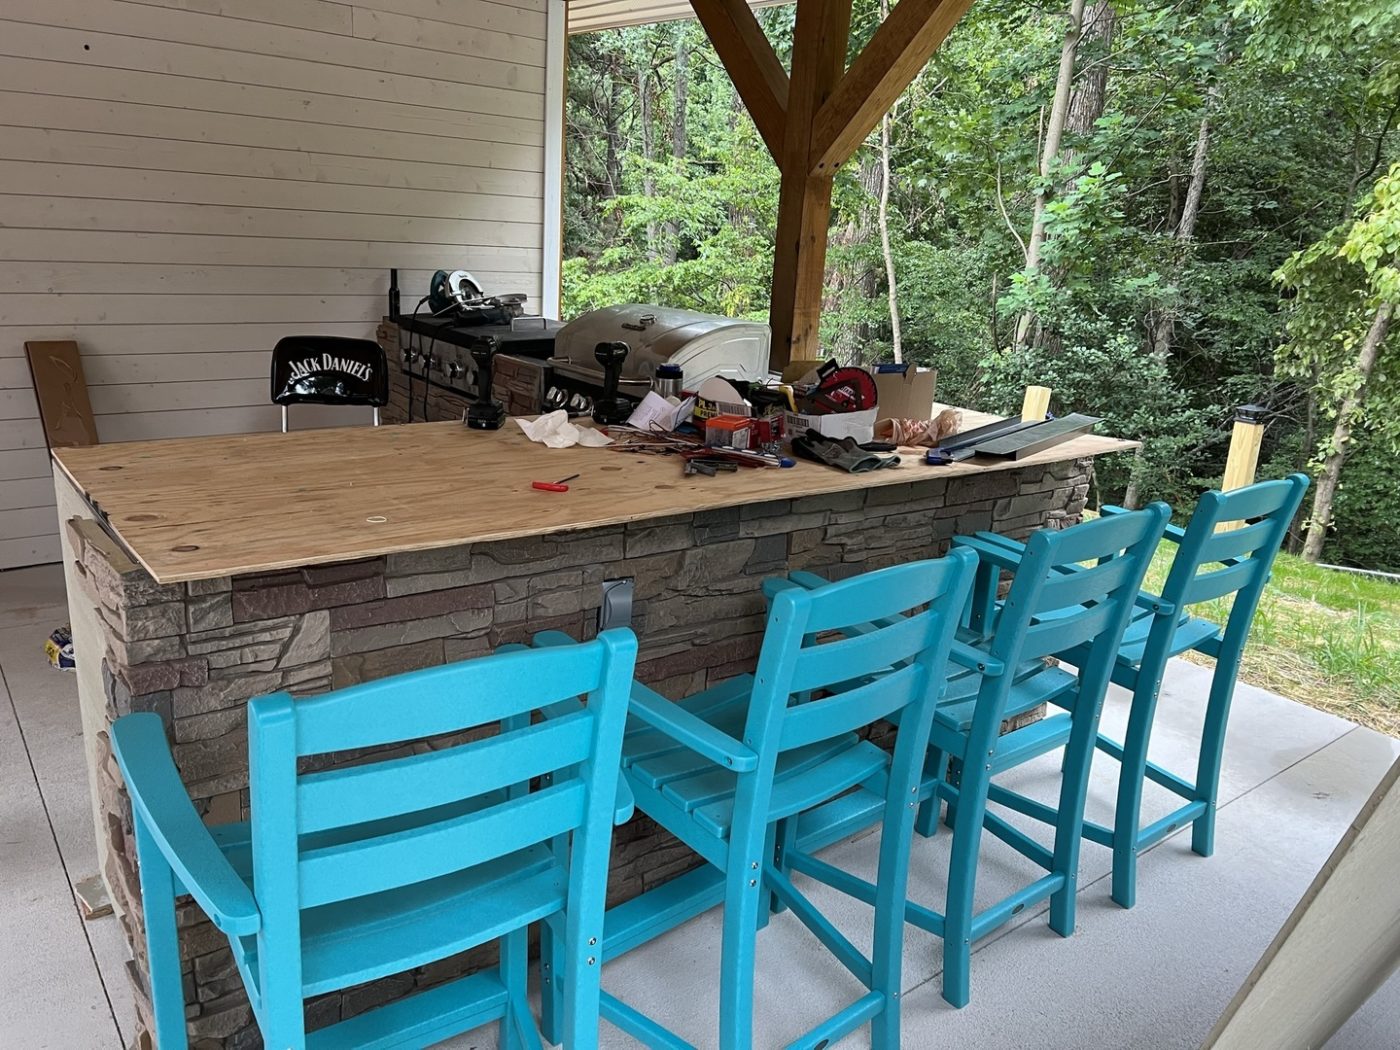 Jeff's DIY Outdoor Kitchen Project